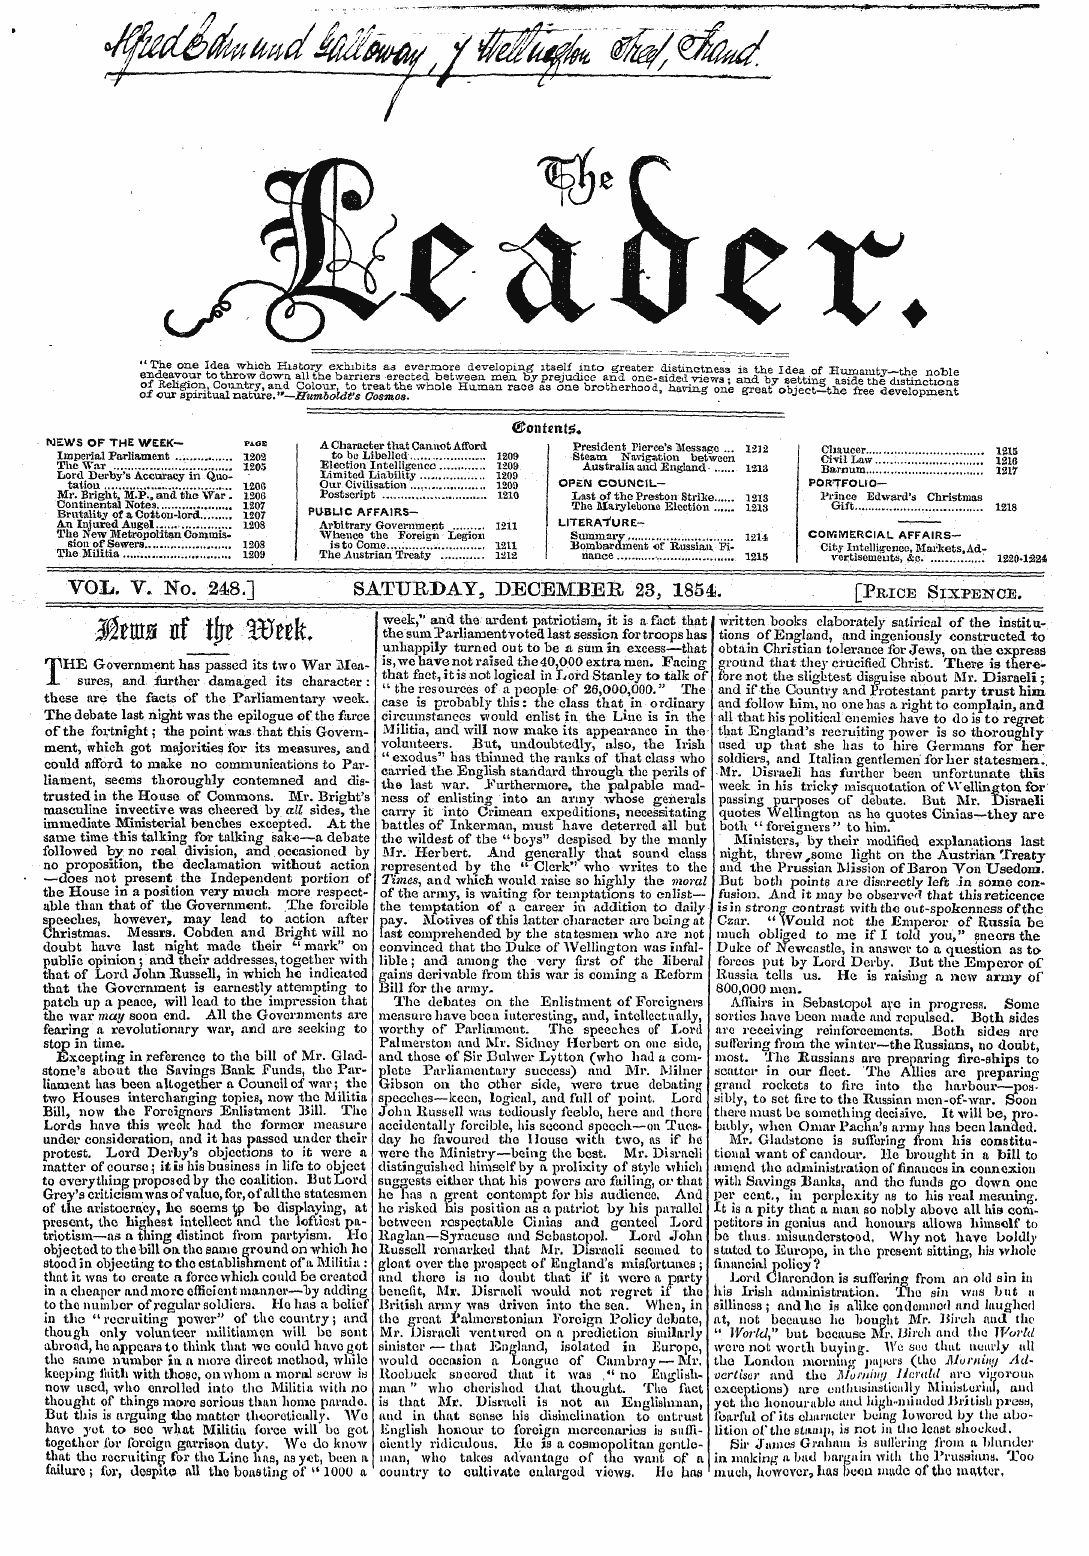 Leader (1850-1860): jS F Y, 2nd edition - **/&Lt; F Xl. &Lt;Vty V. ,^[J%Jttt0 Hi I[J£ £\)Lk\\* ^